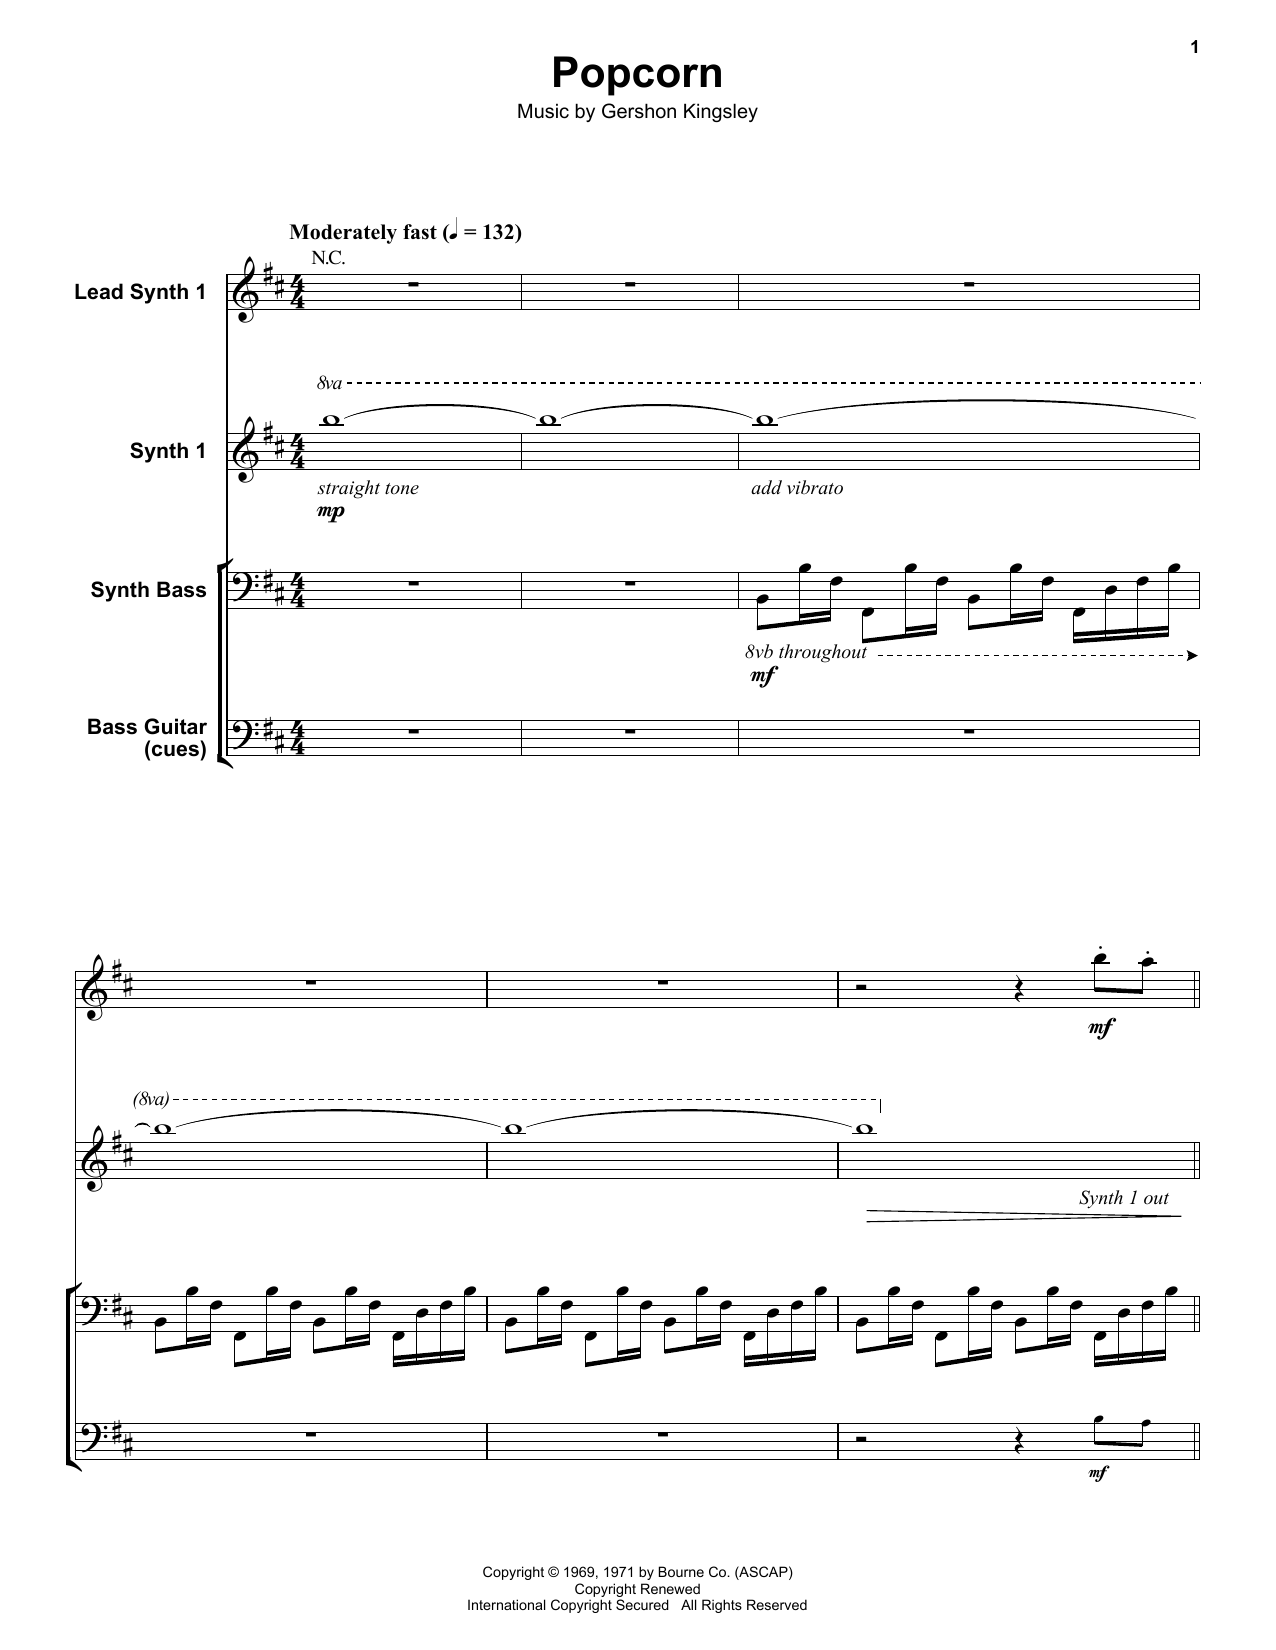 Gershon Kingsley Popcorn Sheet Music Notes & Chords for Keyboard Transcription - Download or Print PDF